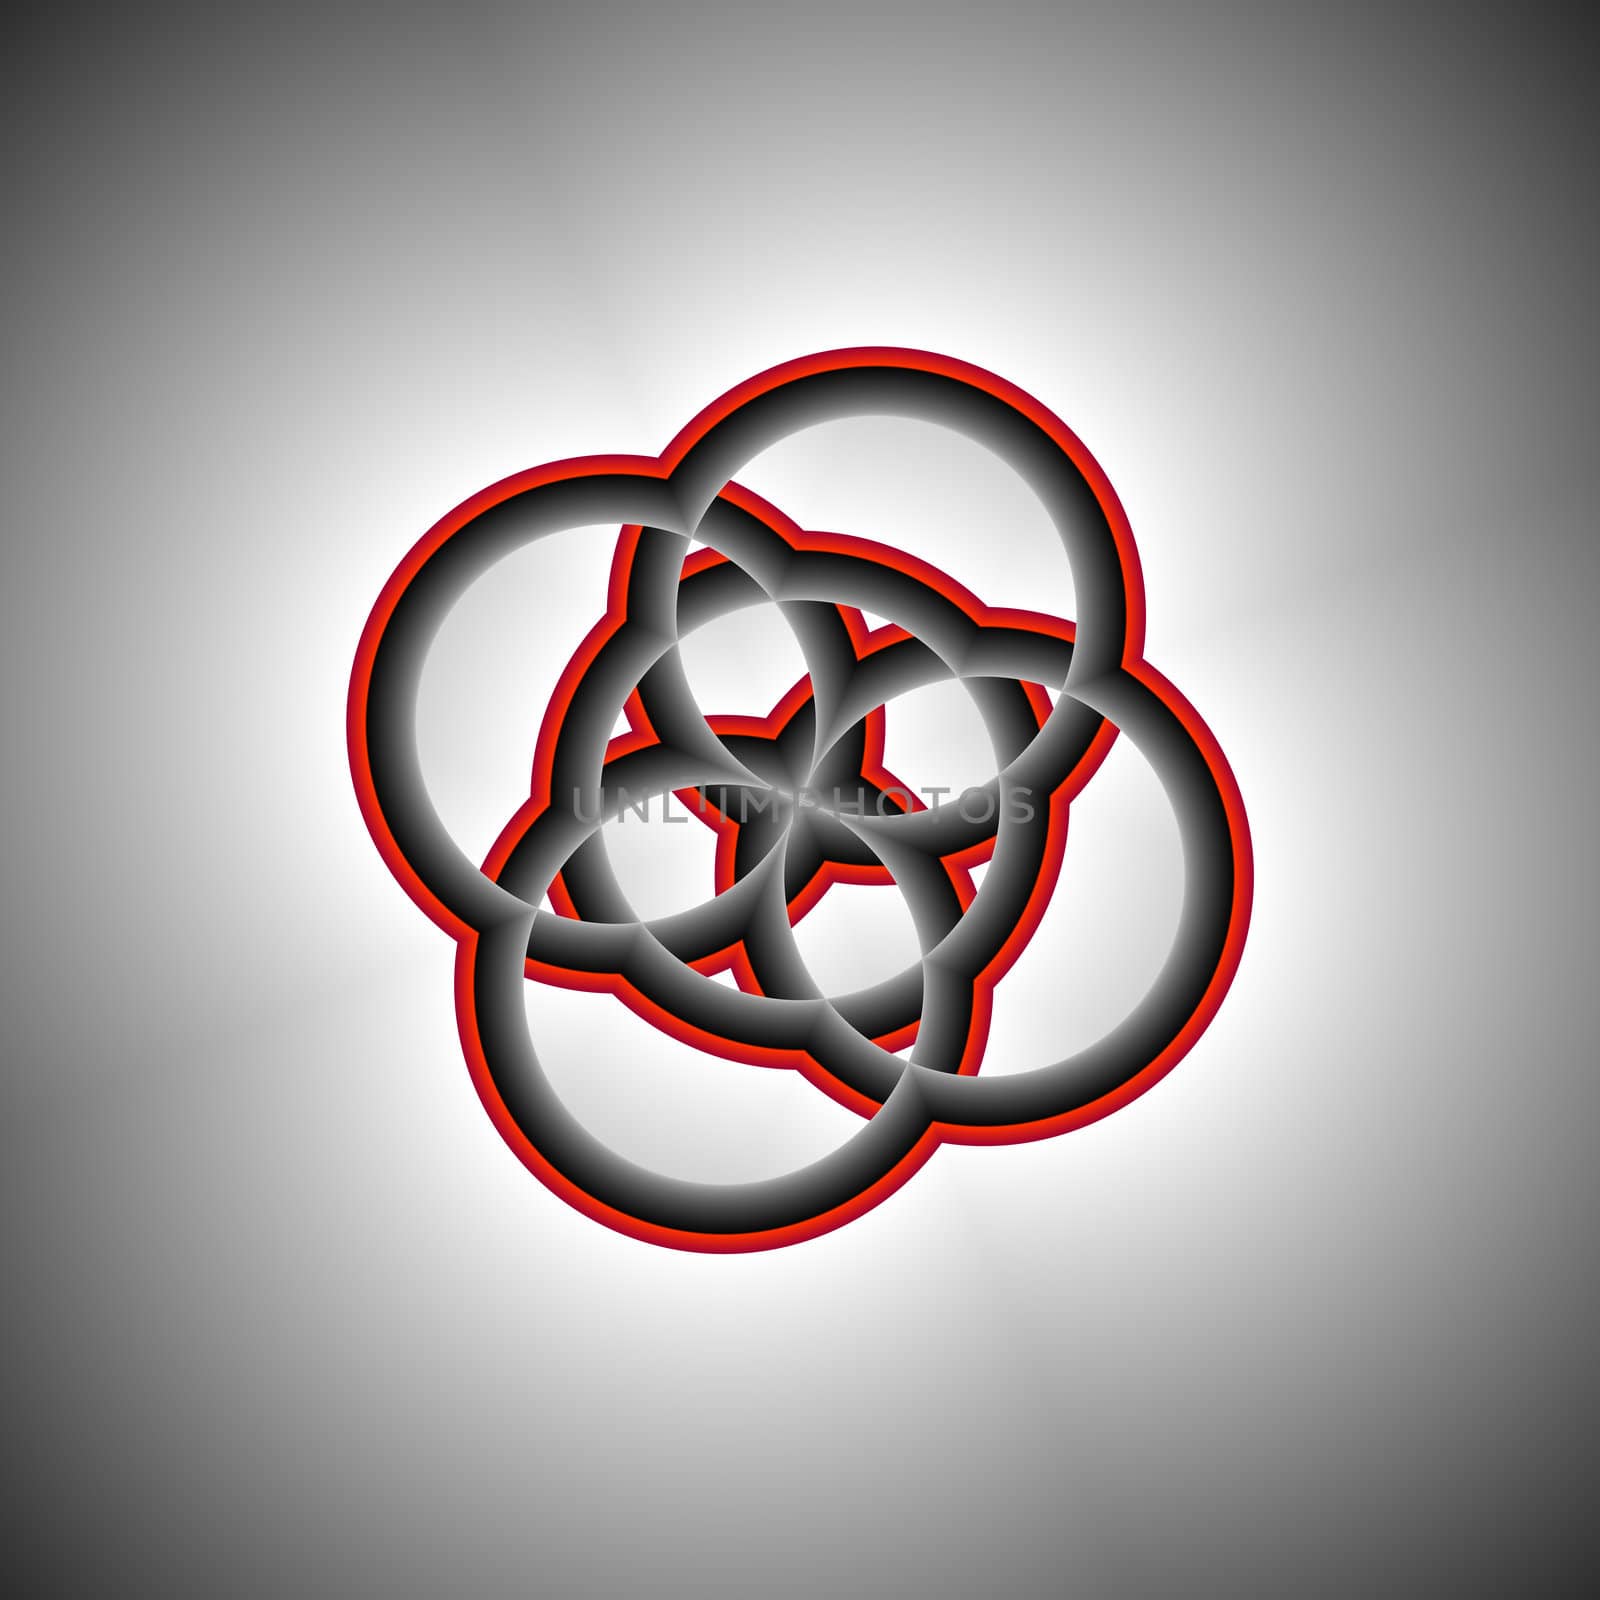 Five Circles Red and Gray Fractal by patballard